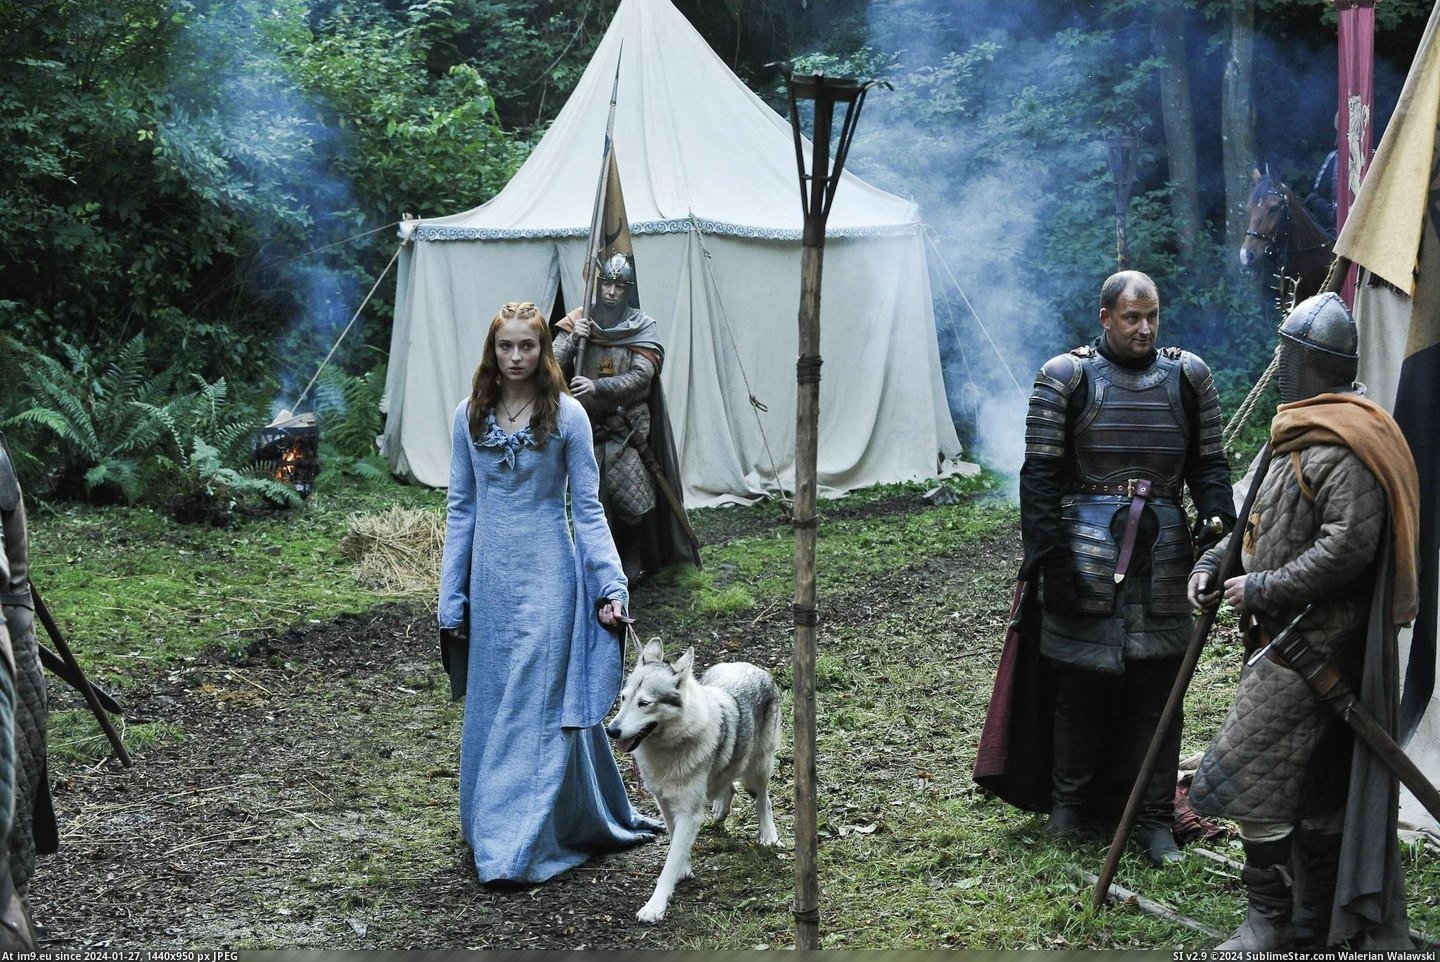 #Game #Thrones #Show Tv Show Game Of Thrones 276448 Pic. (Bild von album TV Shows HD Wallpapers))